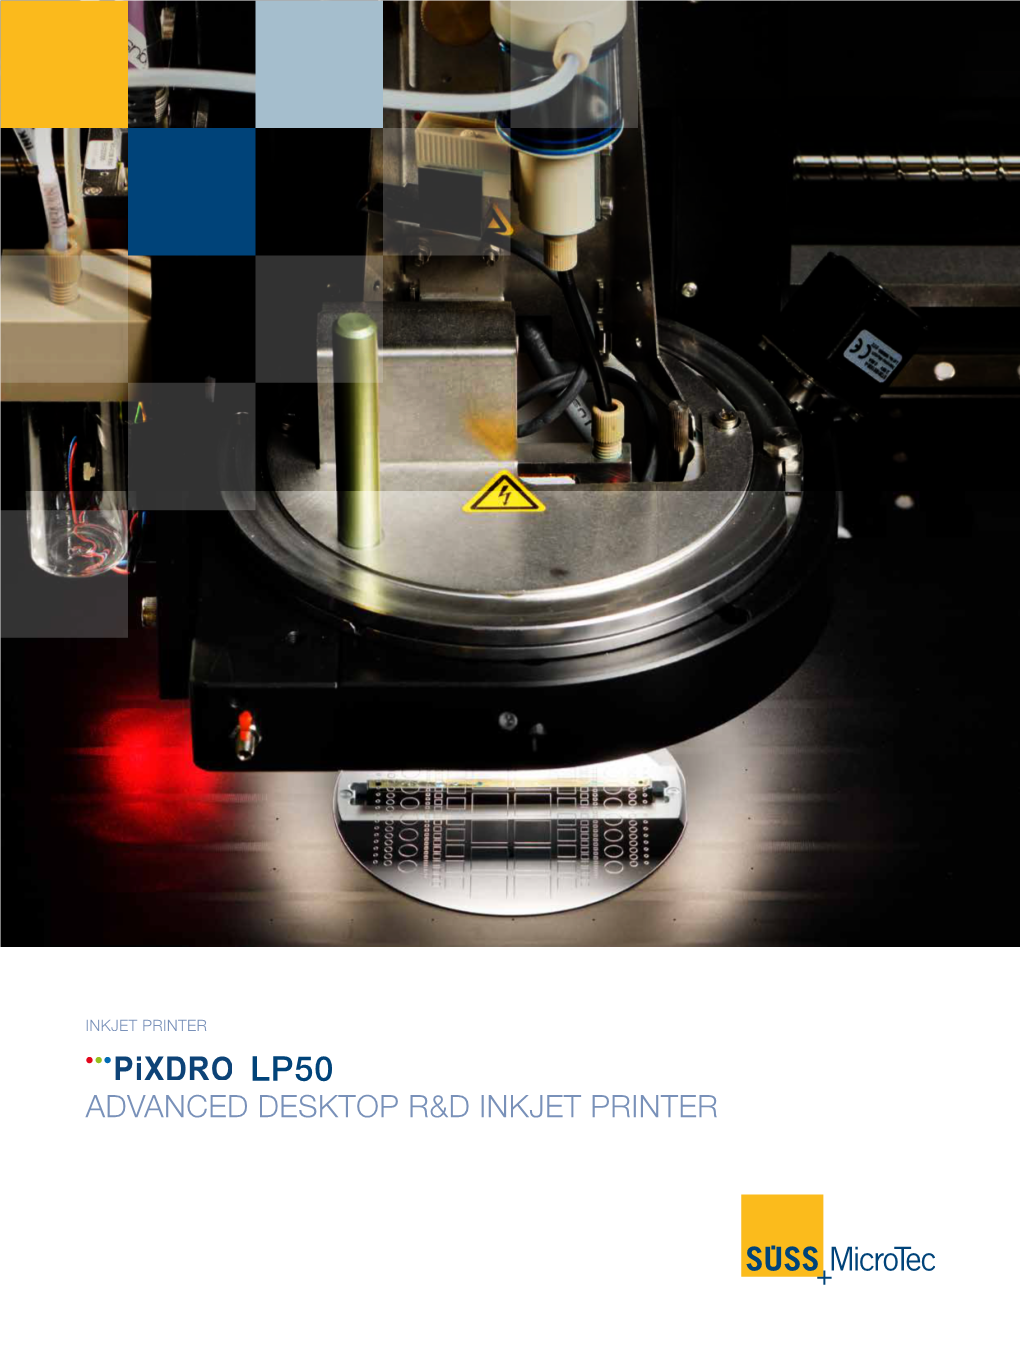 Pixdro LP50 Inkjet Printer